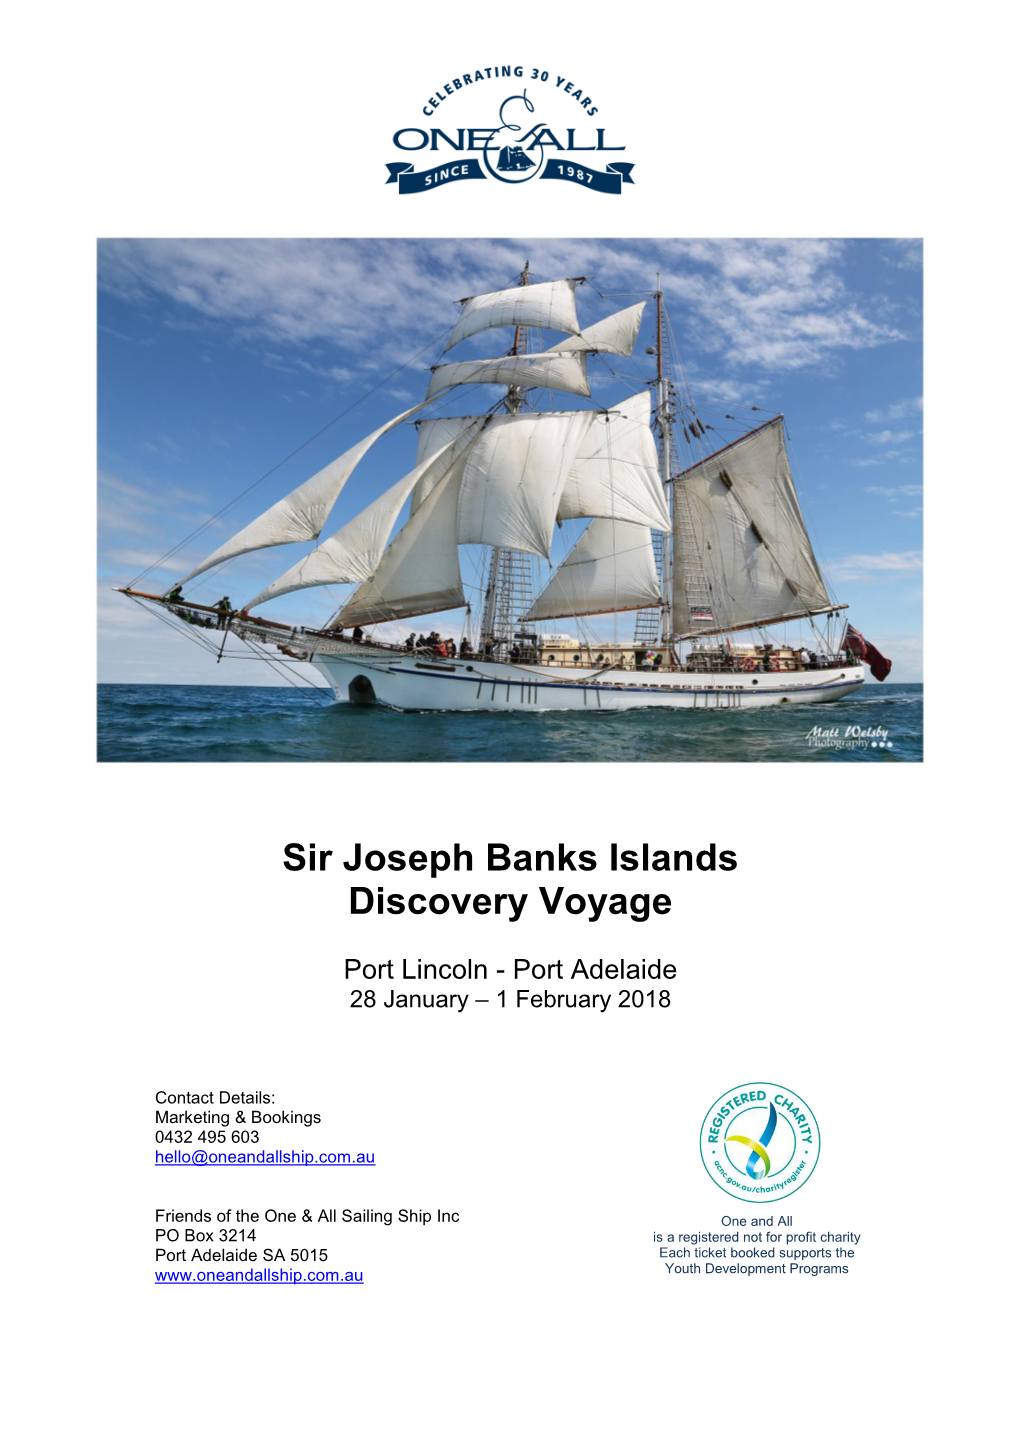 Sir Joseph Banks Islands Discovery Voyage